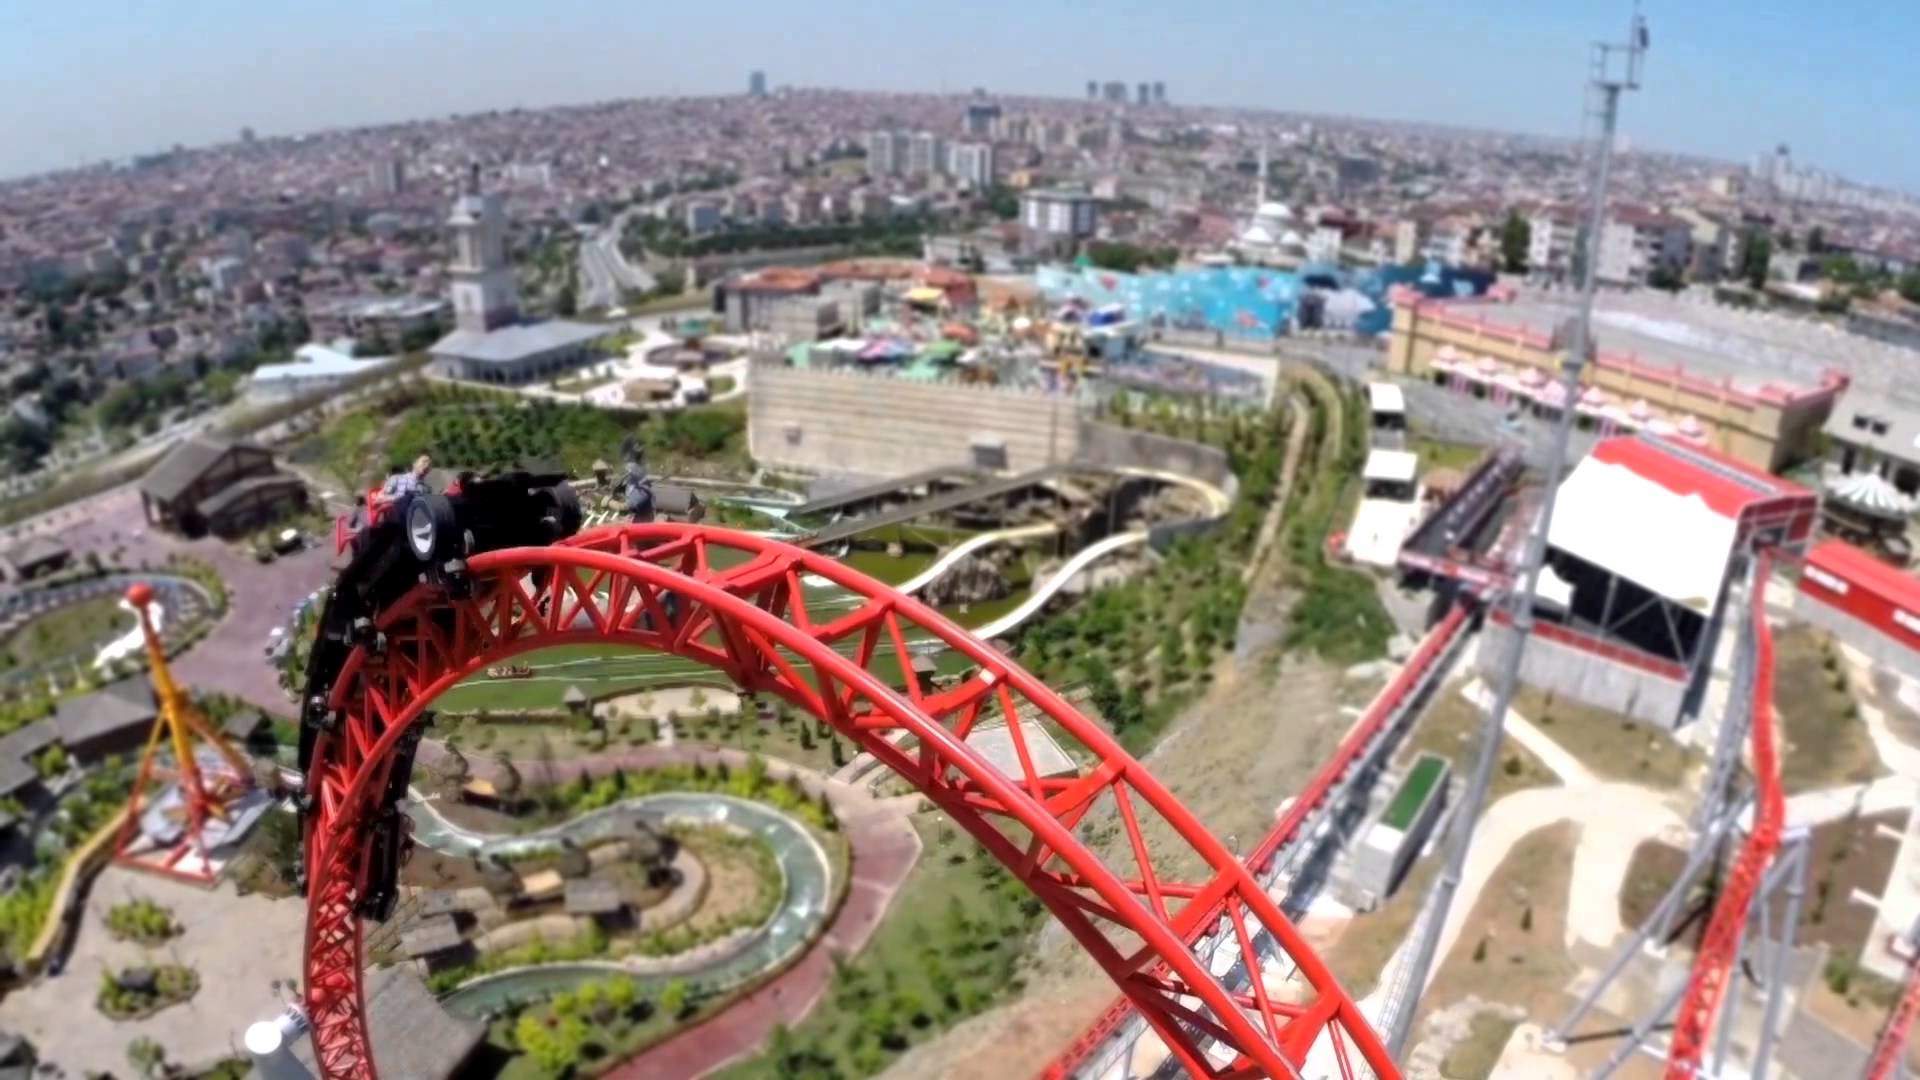 isfanbul former vialand theme park price 2021 istanbul clues